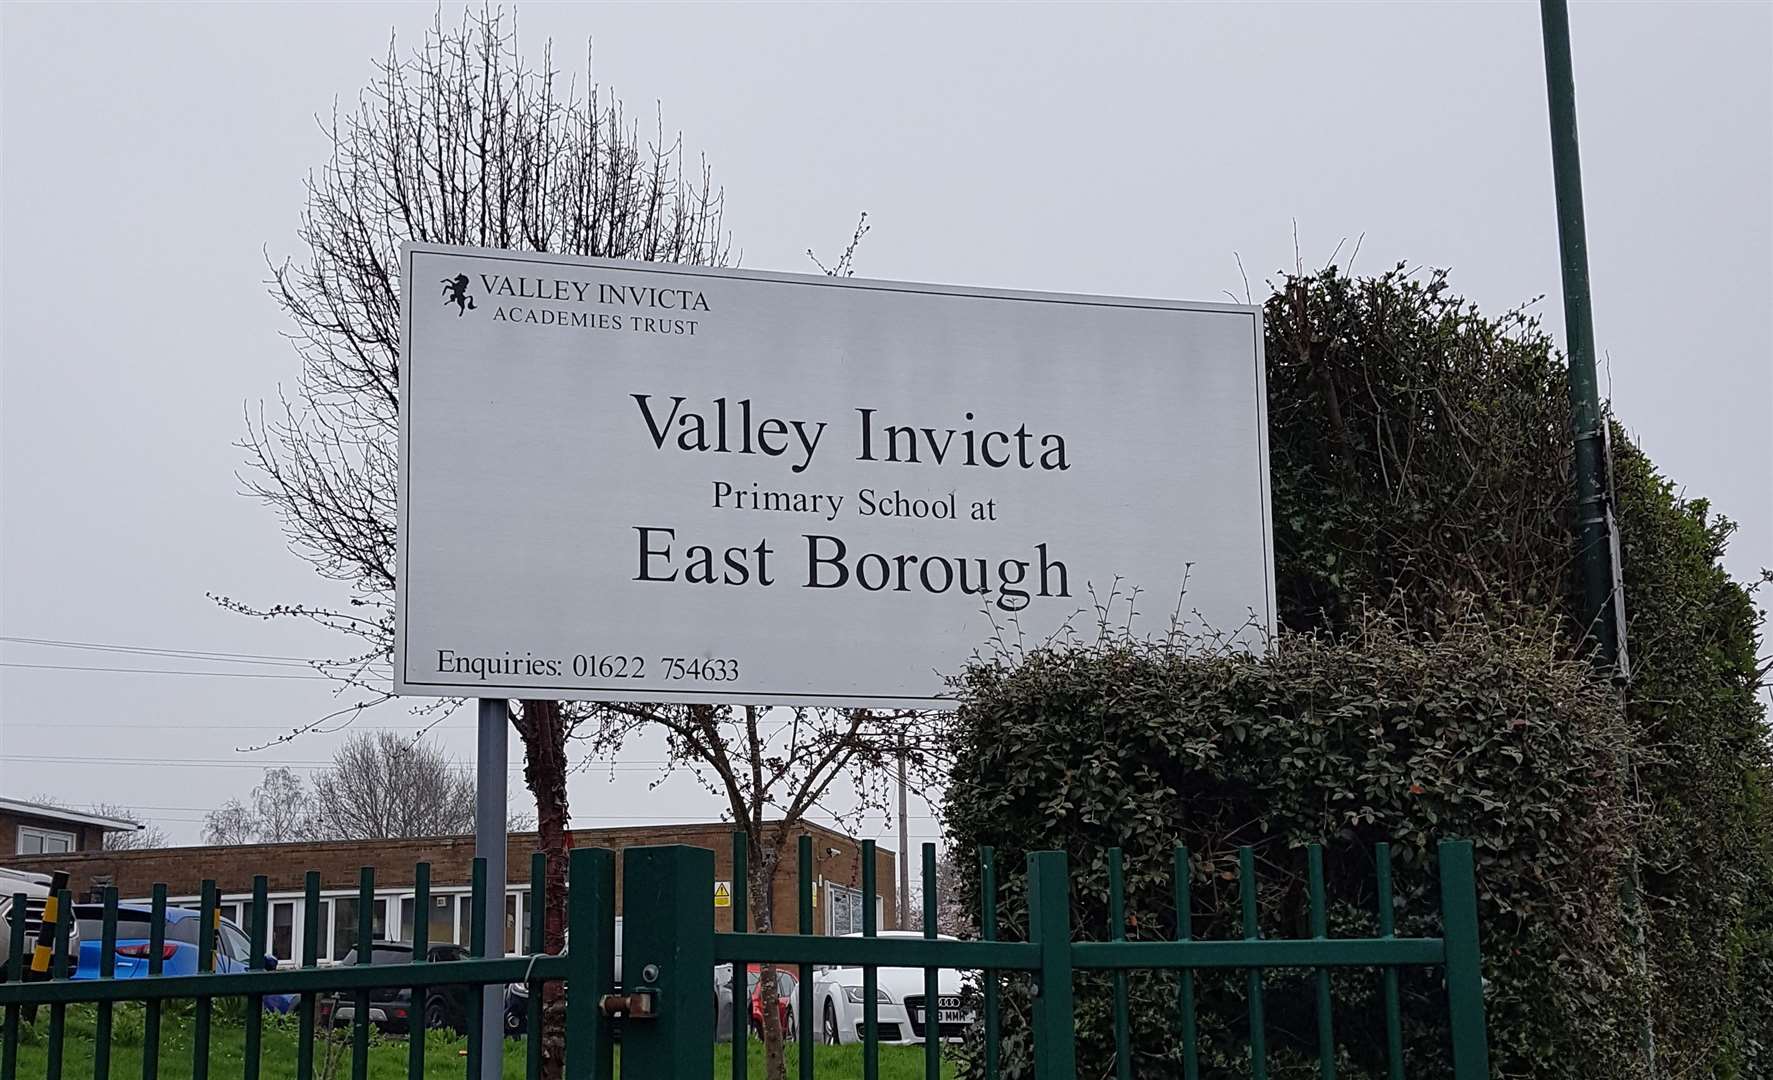 Valley Invicta Primary School at East Borough (32016224)